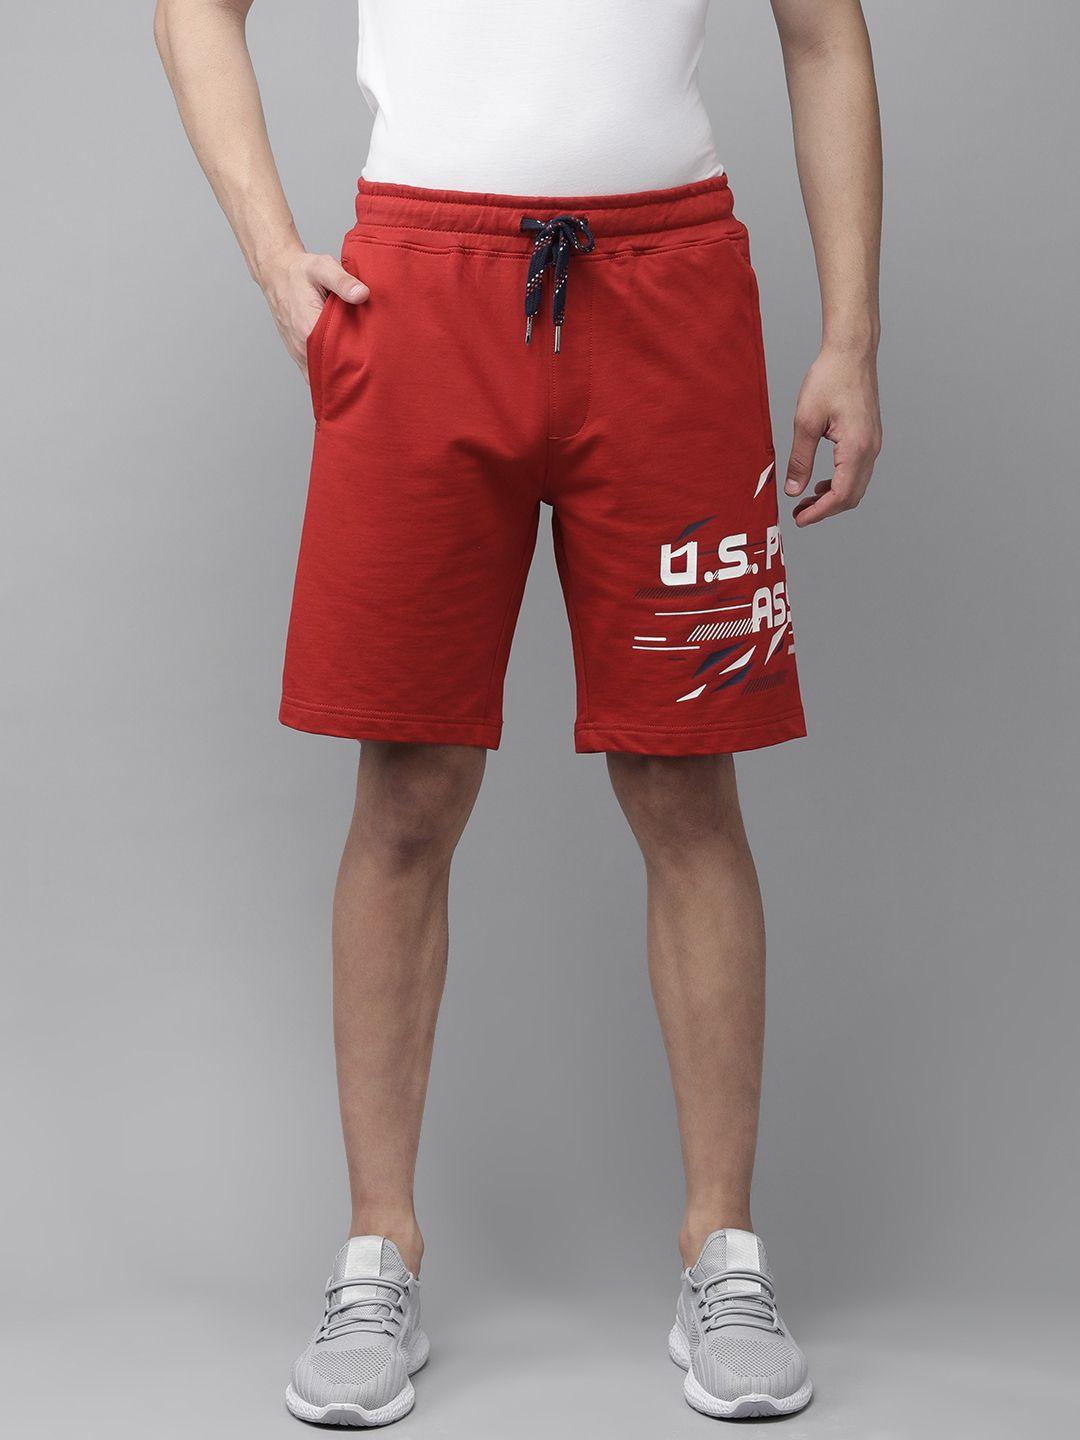 u s polo assn men red typography printed regular shorts